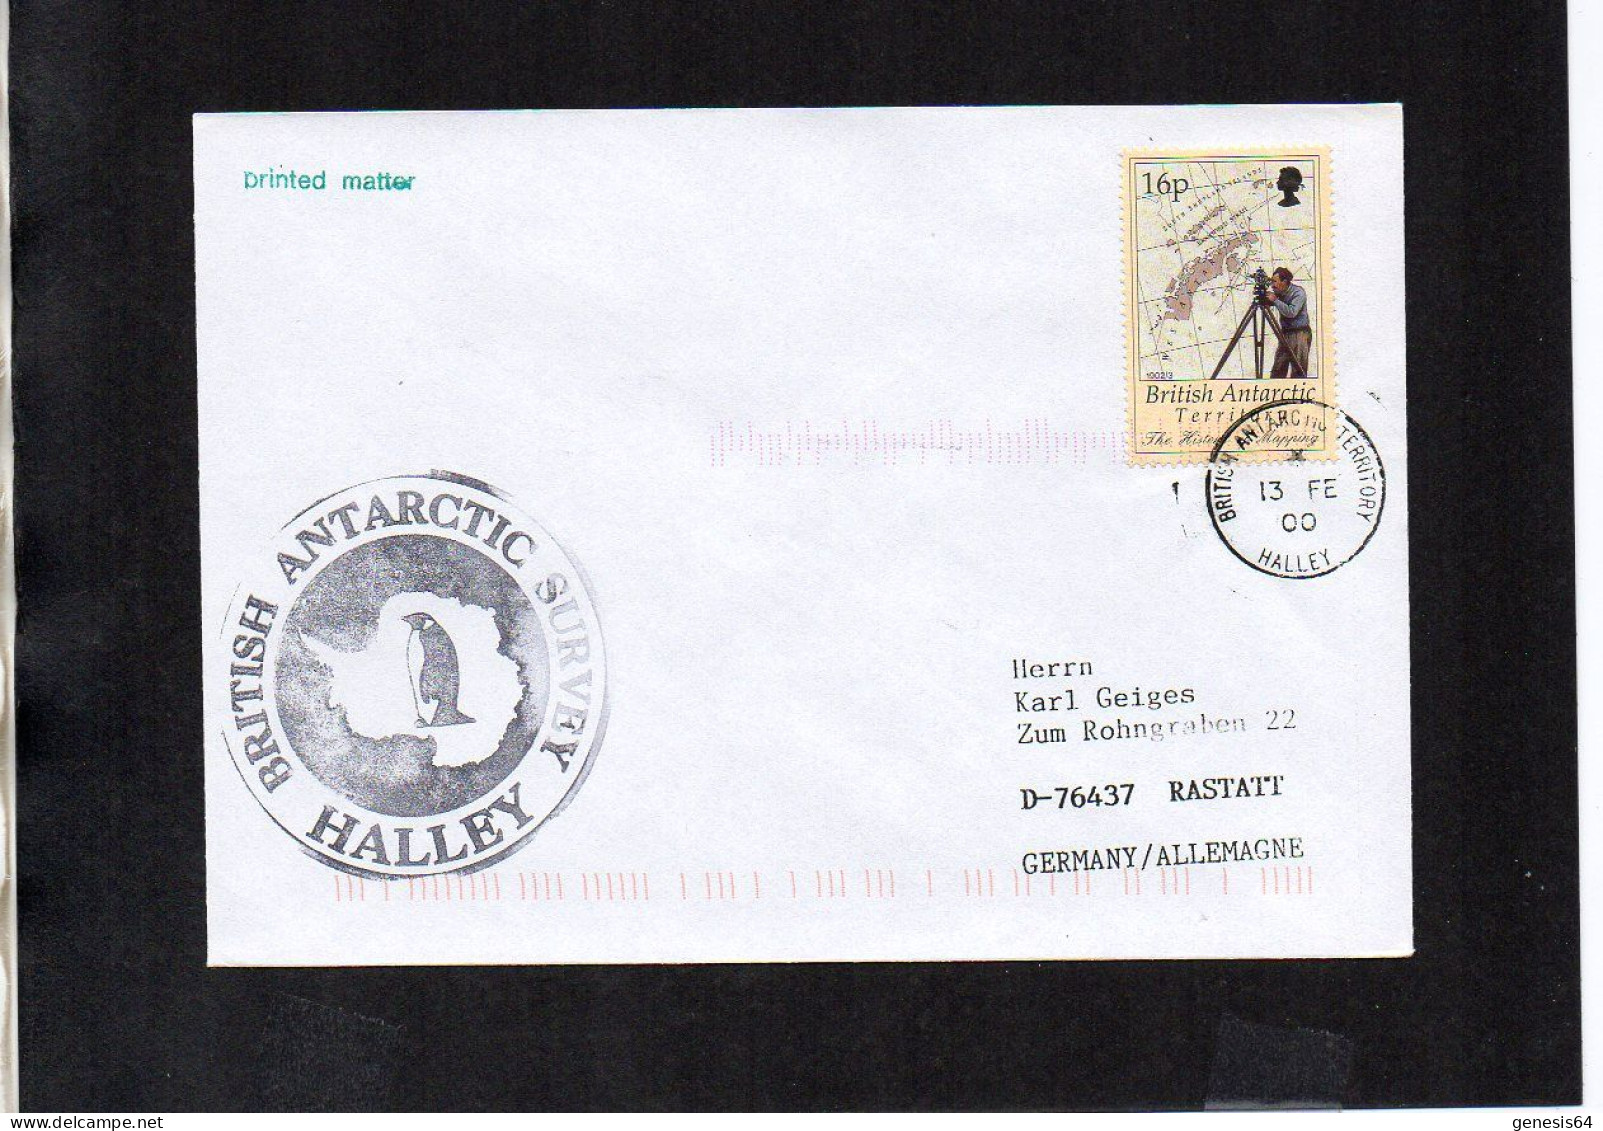 British Antarctic Territory (BAT) 2000 Cover - Halley 13 FE 00 - (1ATK023) - Briefe U. Dokumente